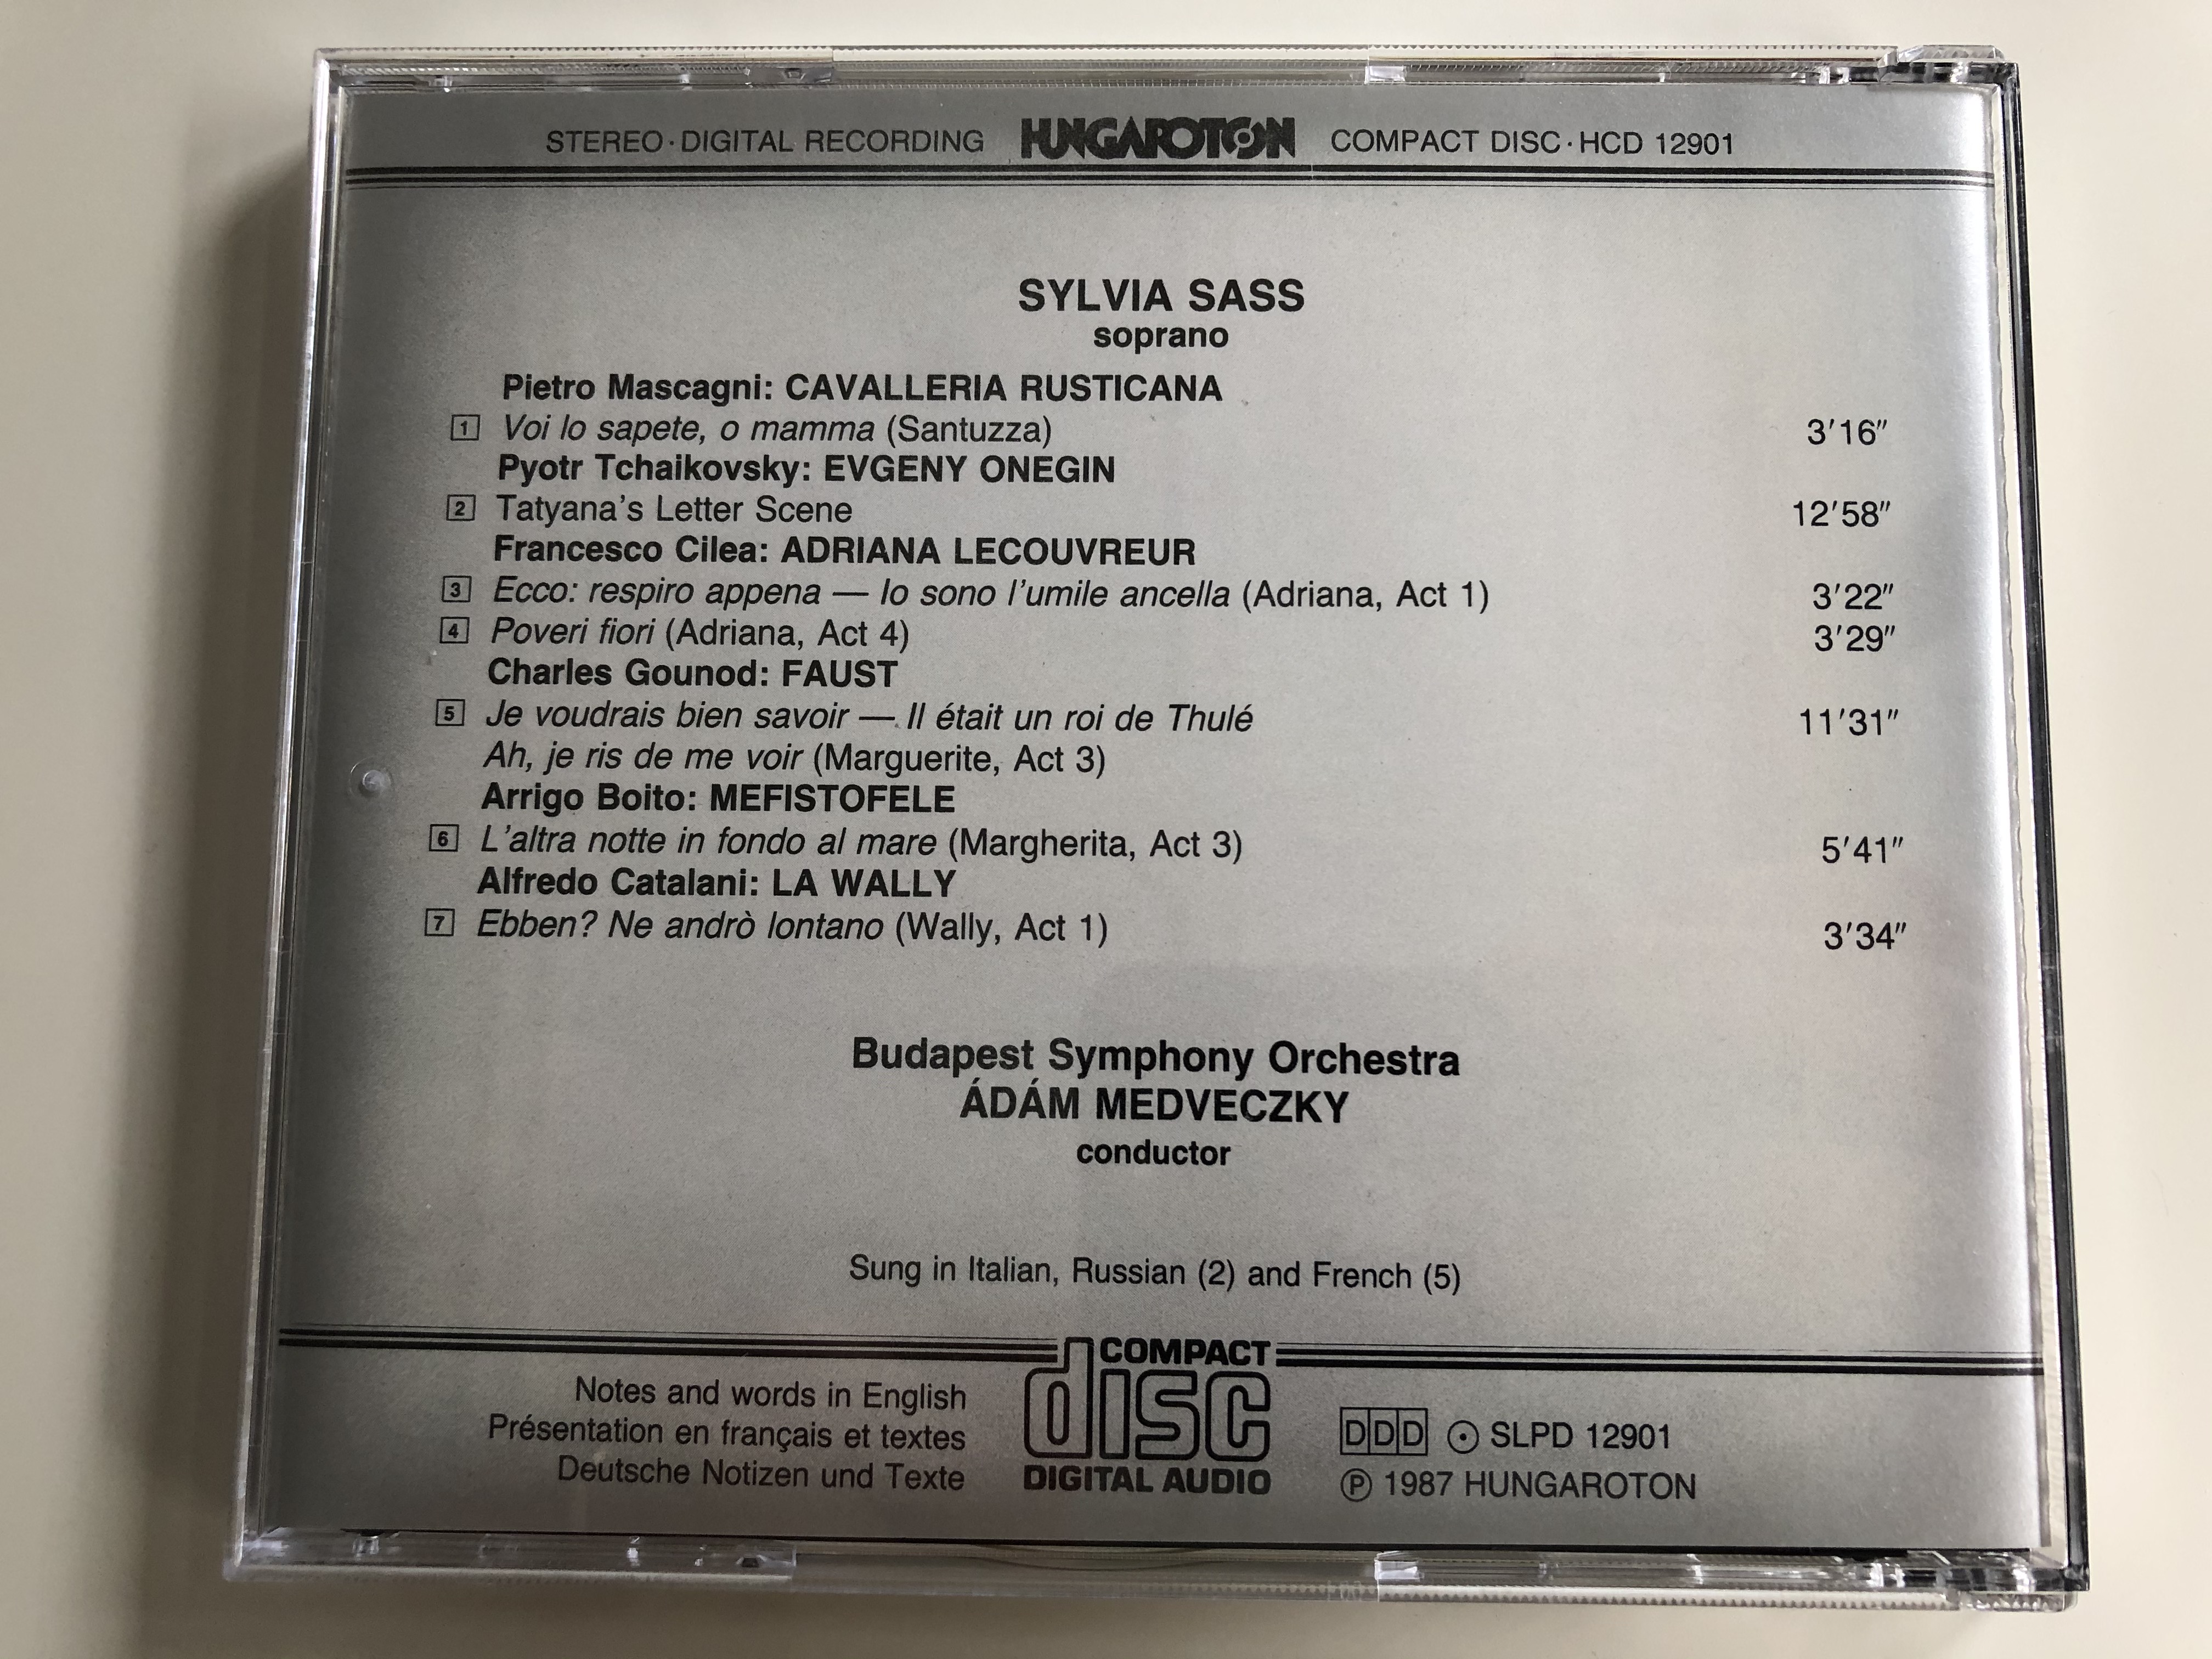 operatic-arias-sylvia-sass-budapest-symphony-orchestra-conducted-d-m-medveczky-hungaroton-audio-cd-1987-stereo-hcd-12901-11-.jpg